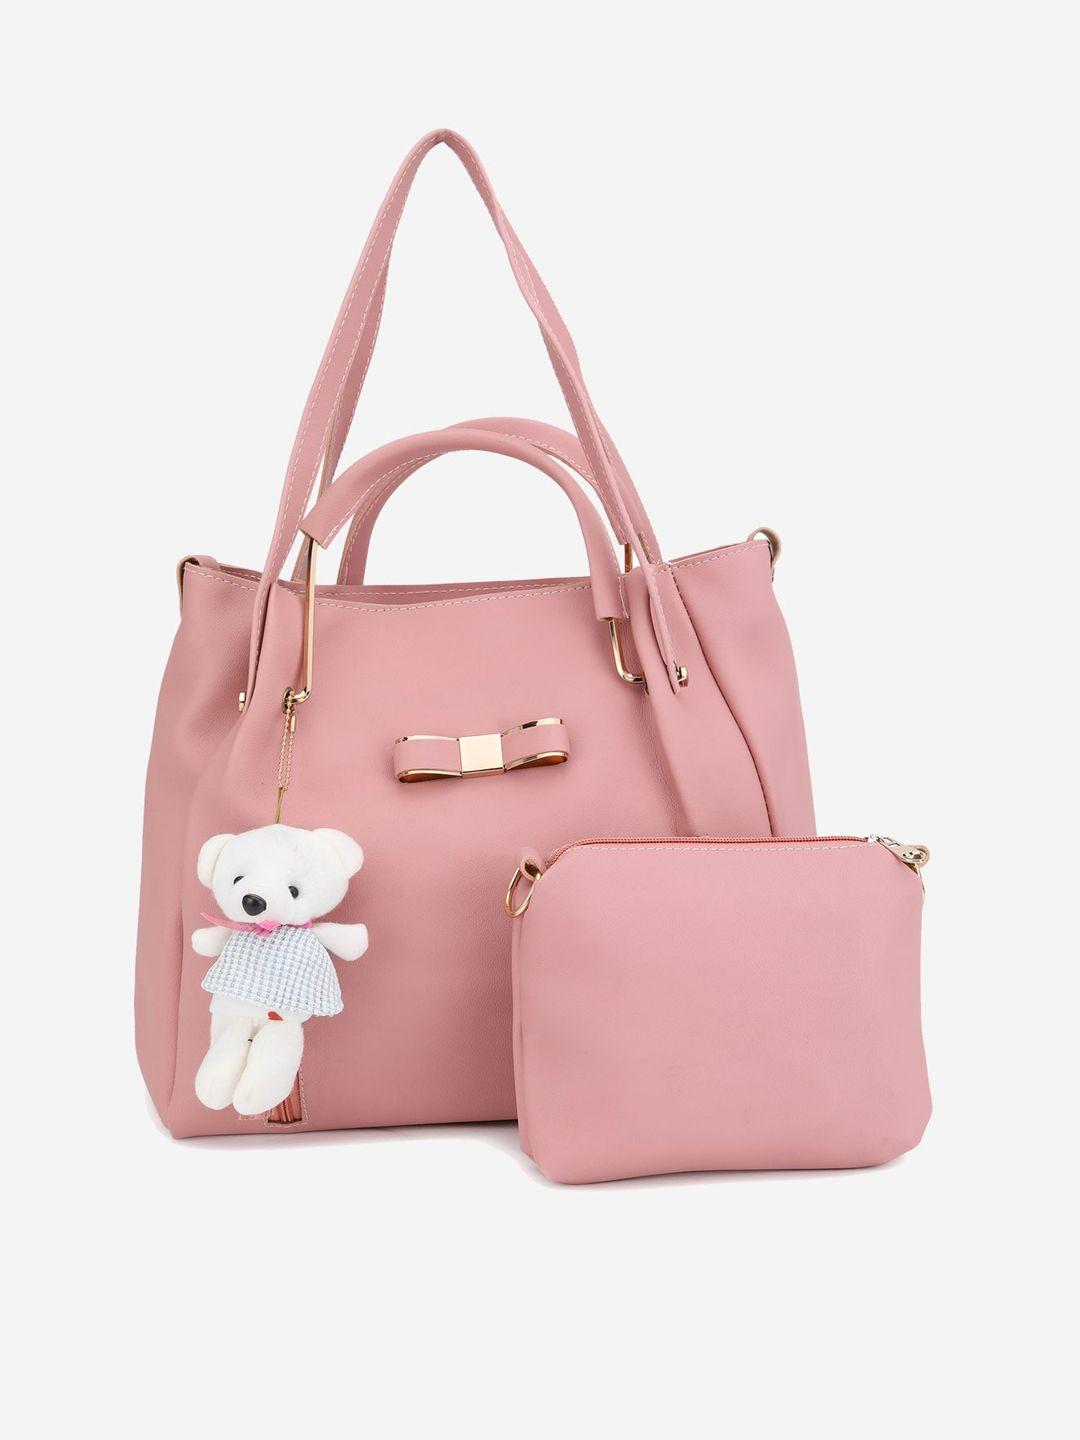 stropcarry pink structured embellished shoulder bag with pouch